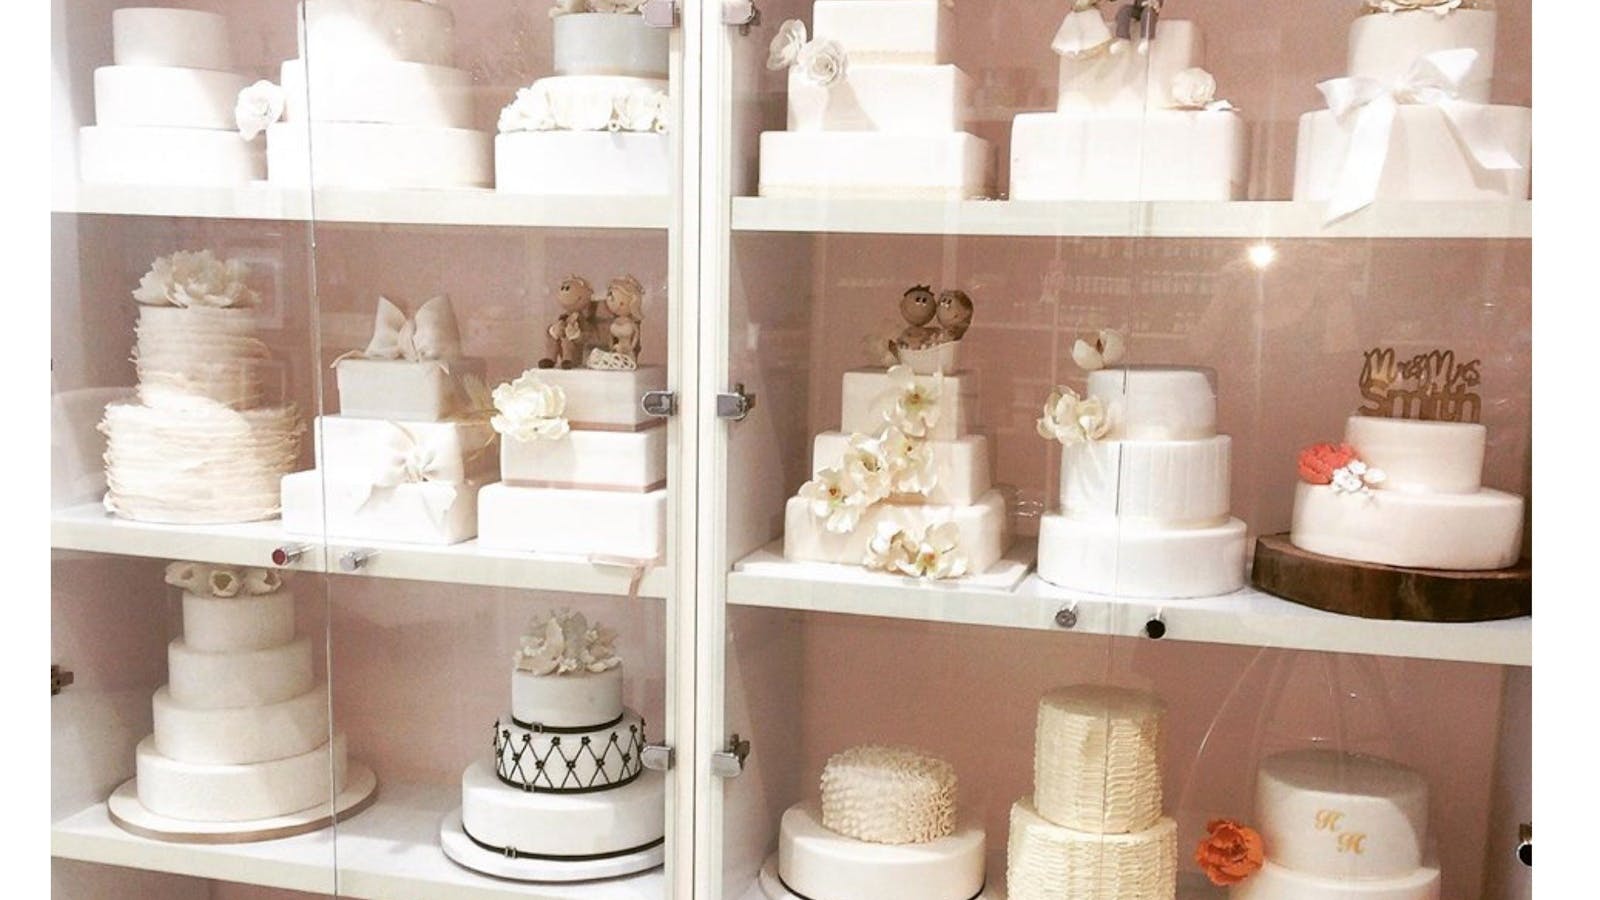 Becs Cake Creations - Wedding Cakes